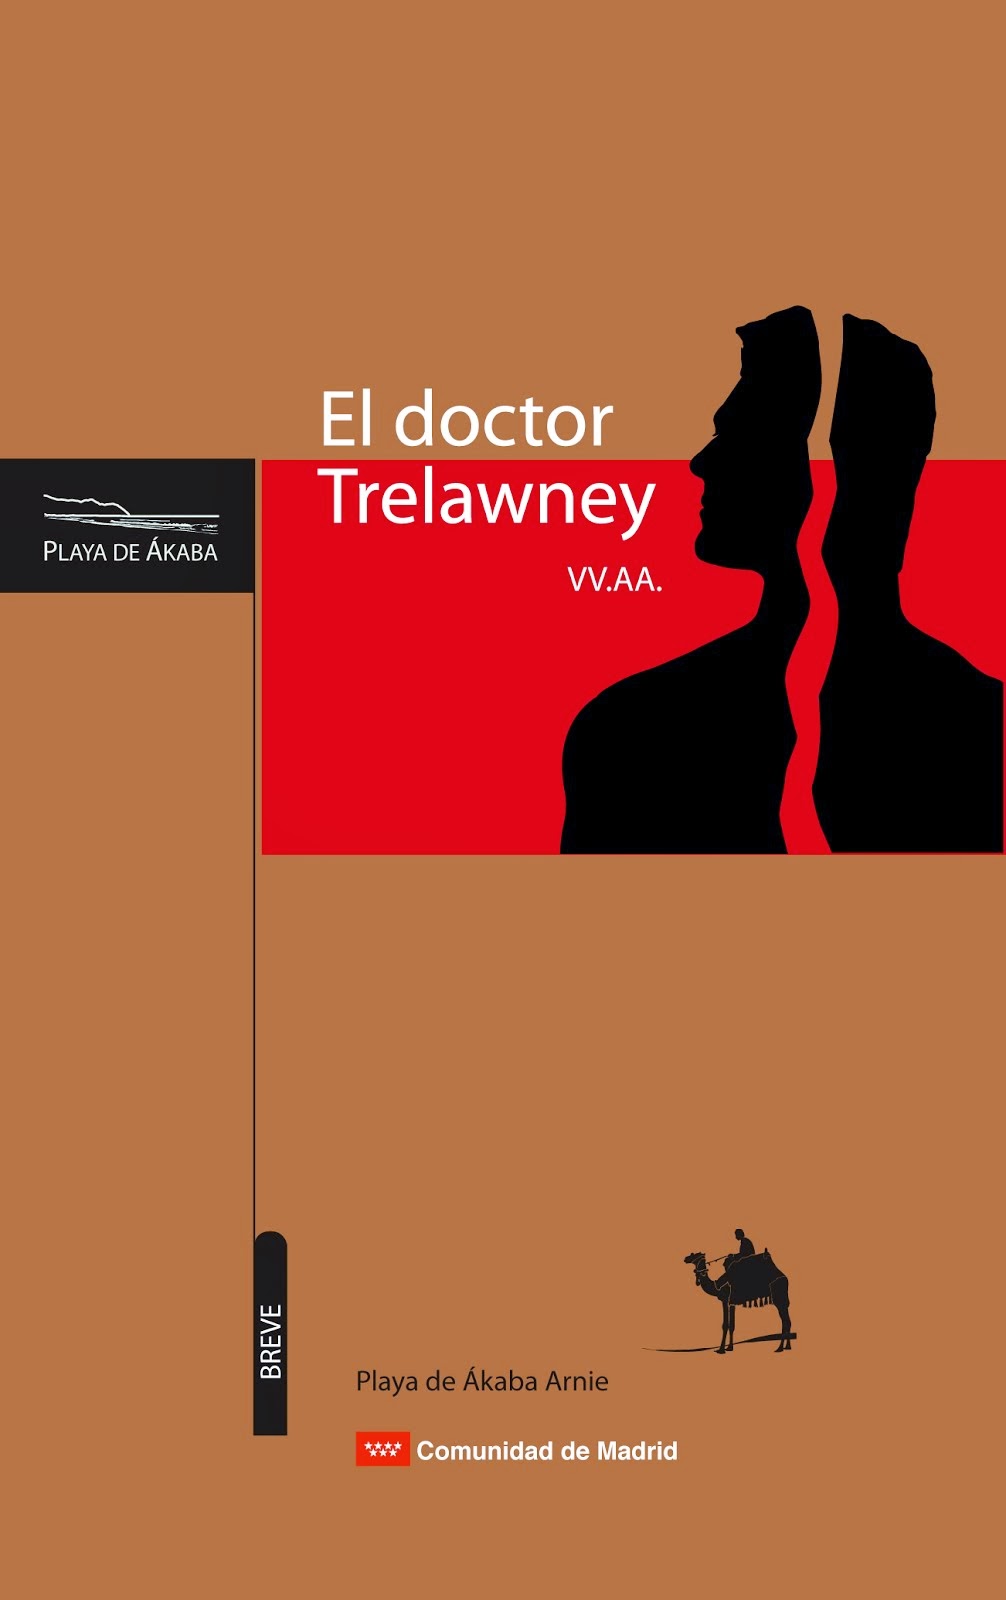 El doctor Trelawney